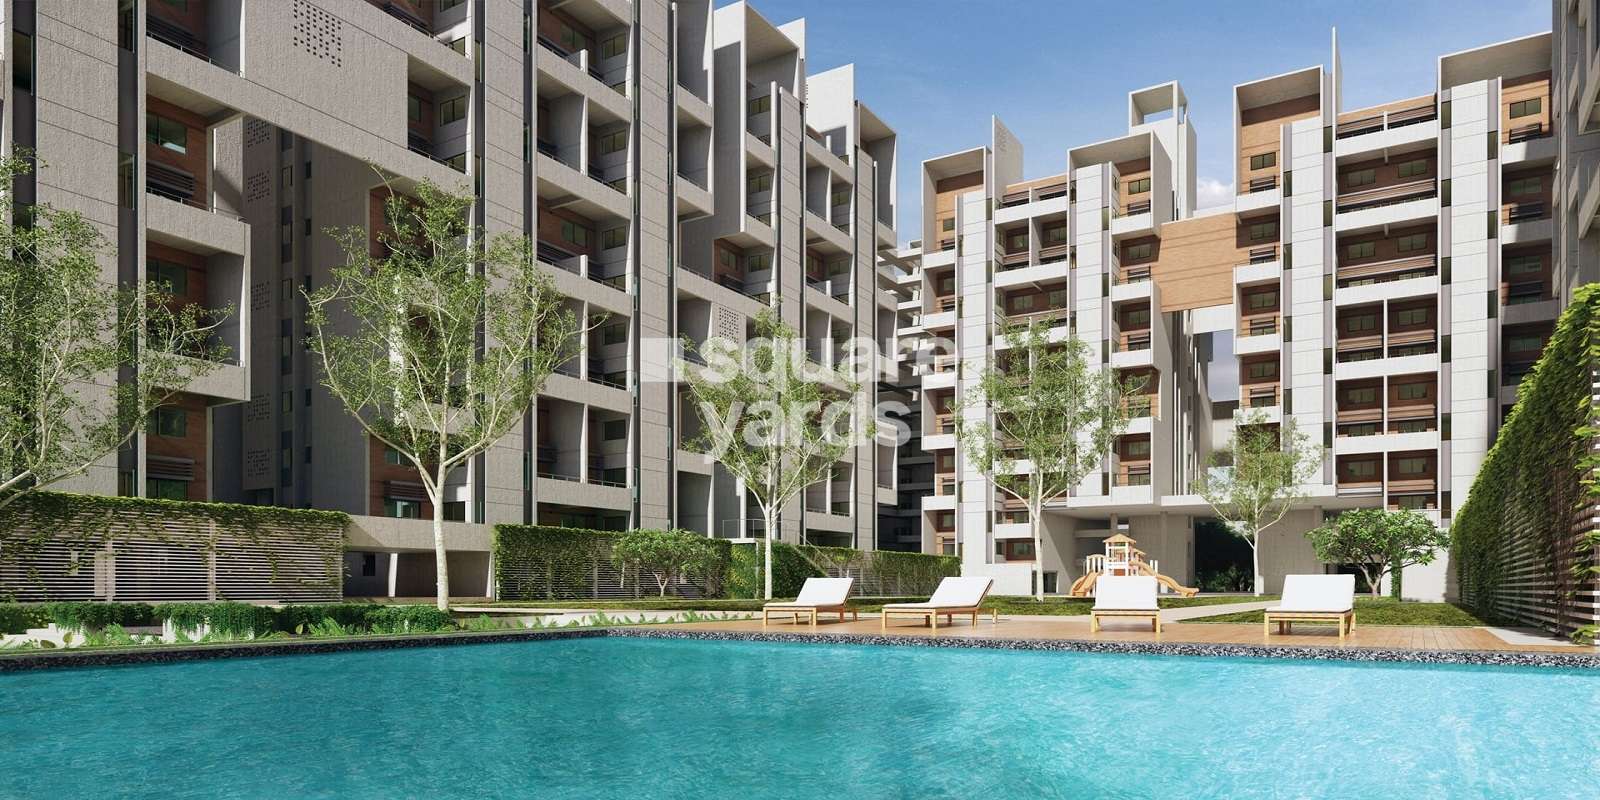 rohan abhilasha building d project amenities features5